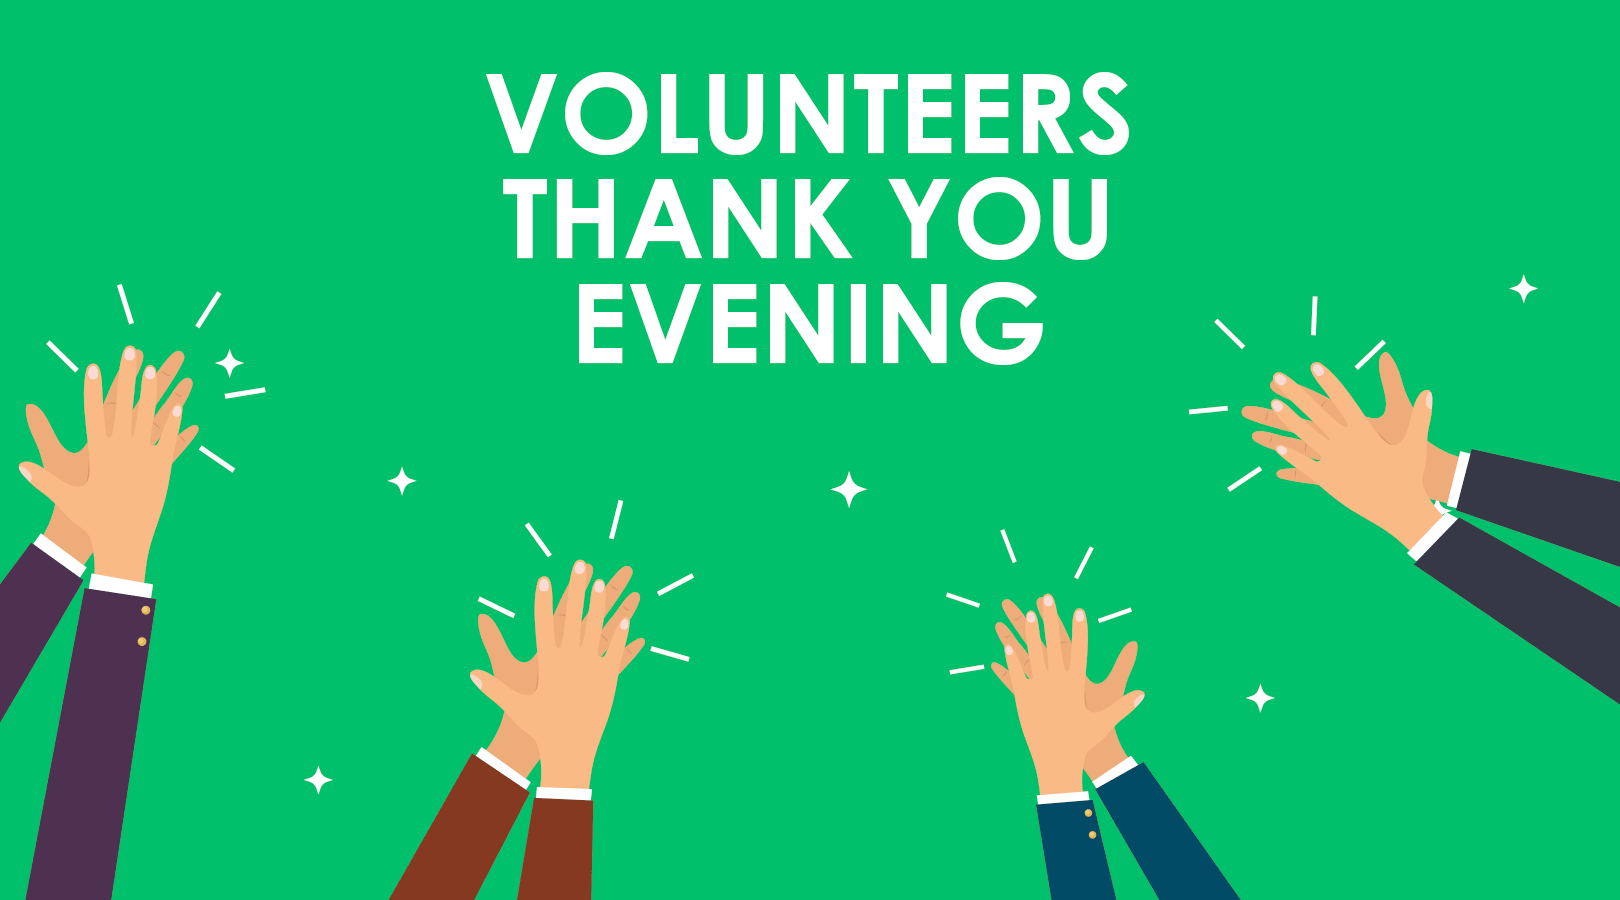 Volunteers Thank You evening